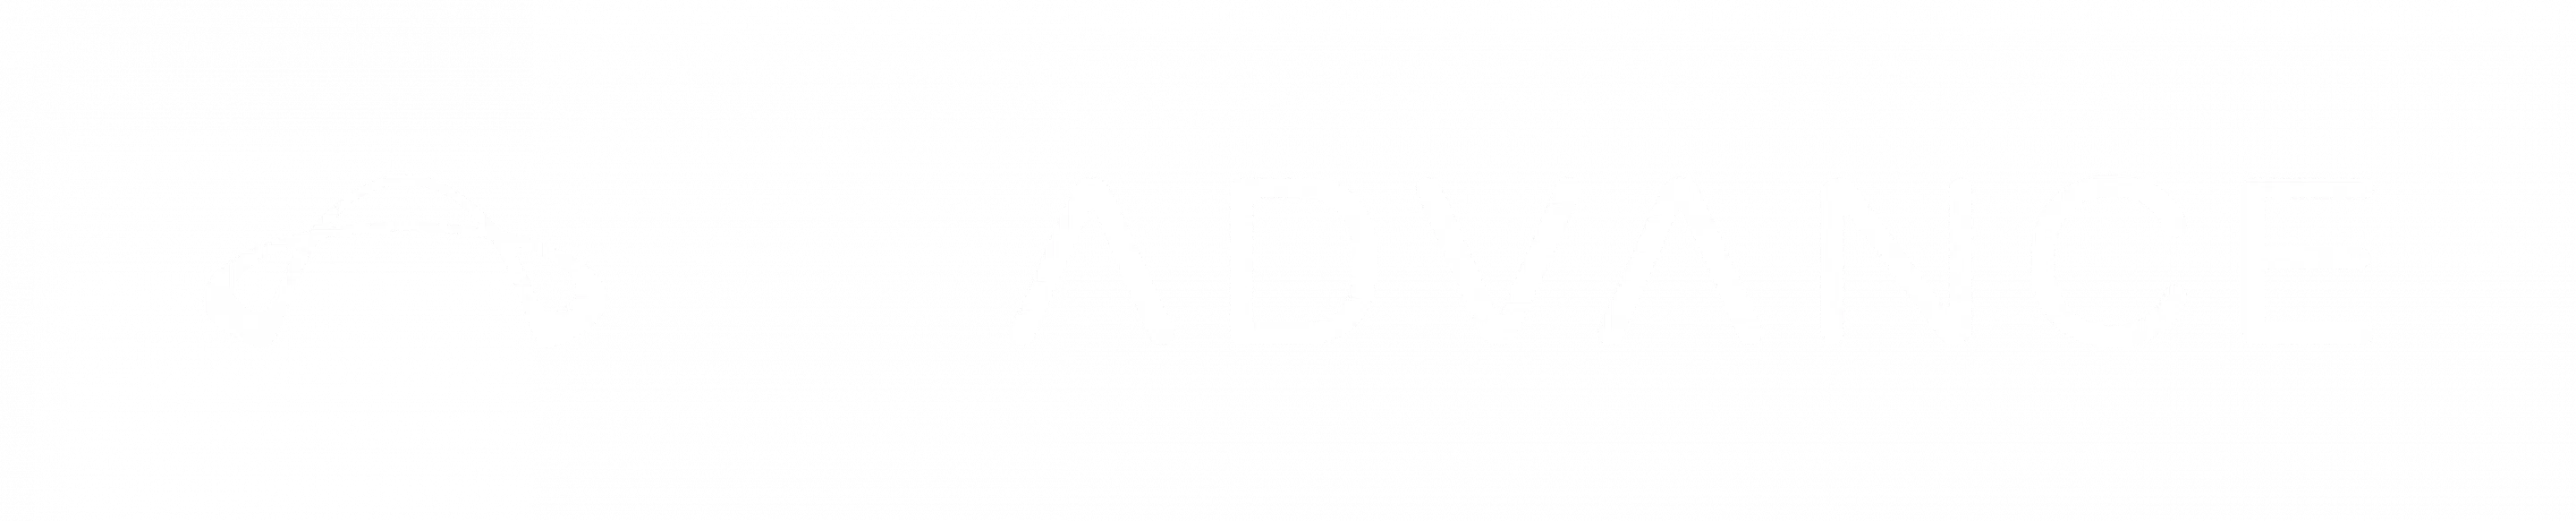 Advance Logo white